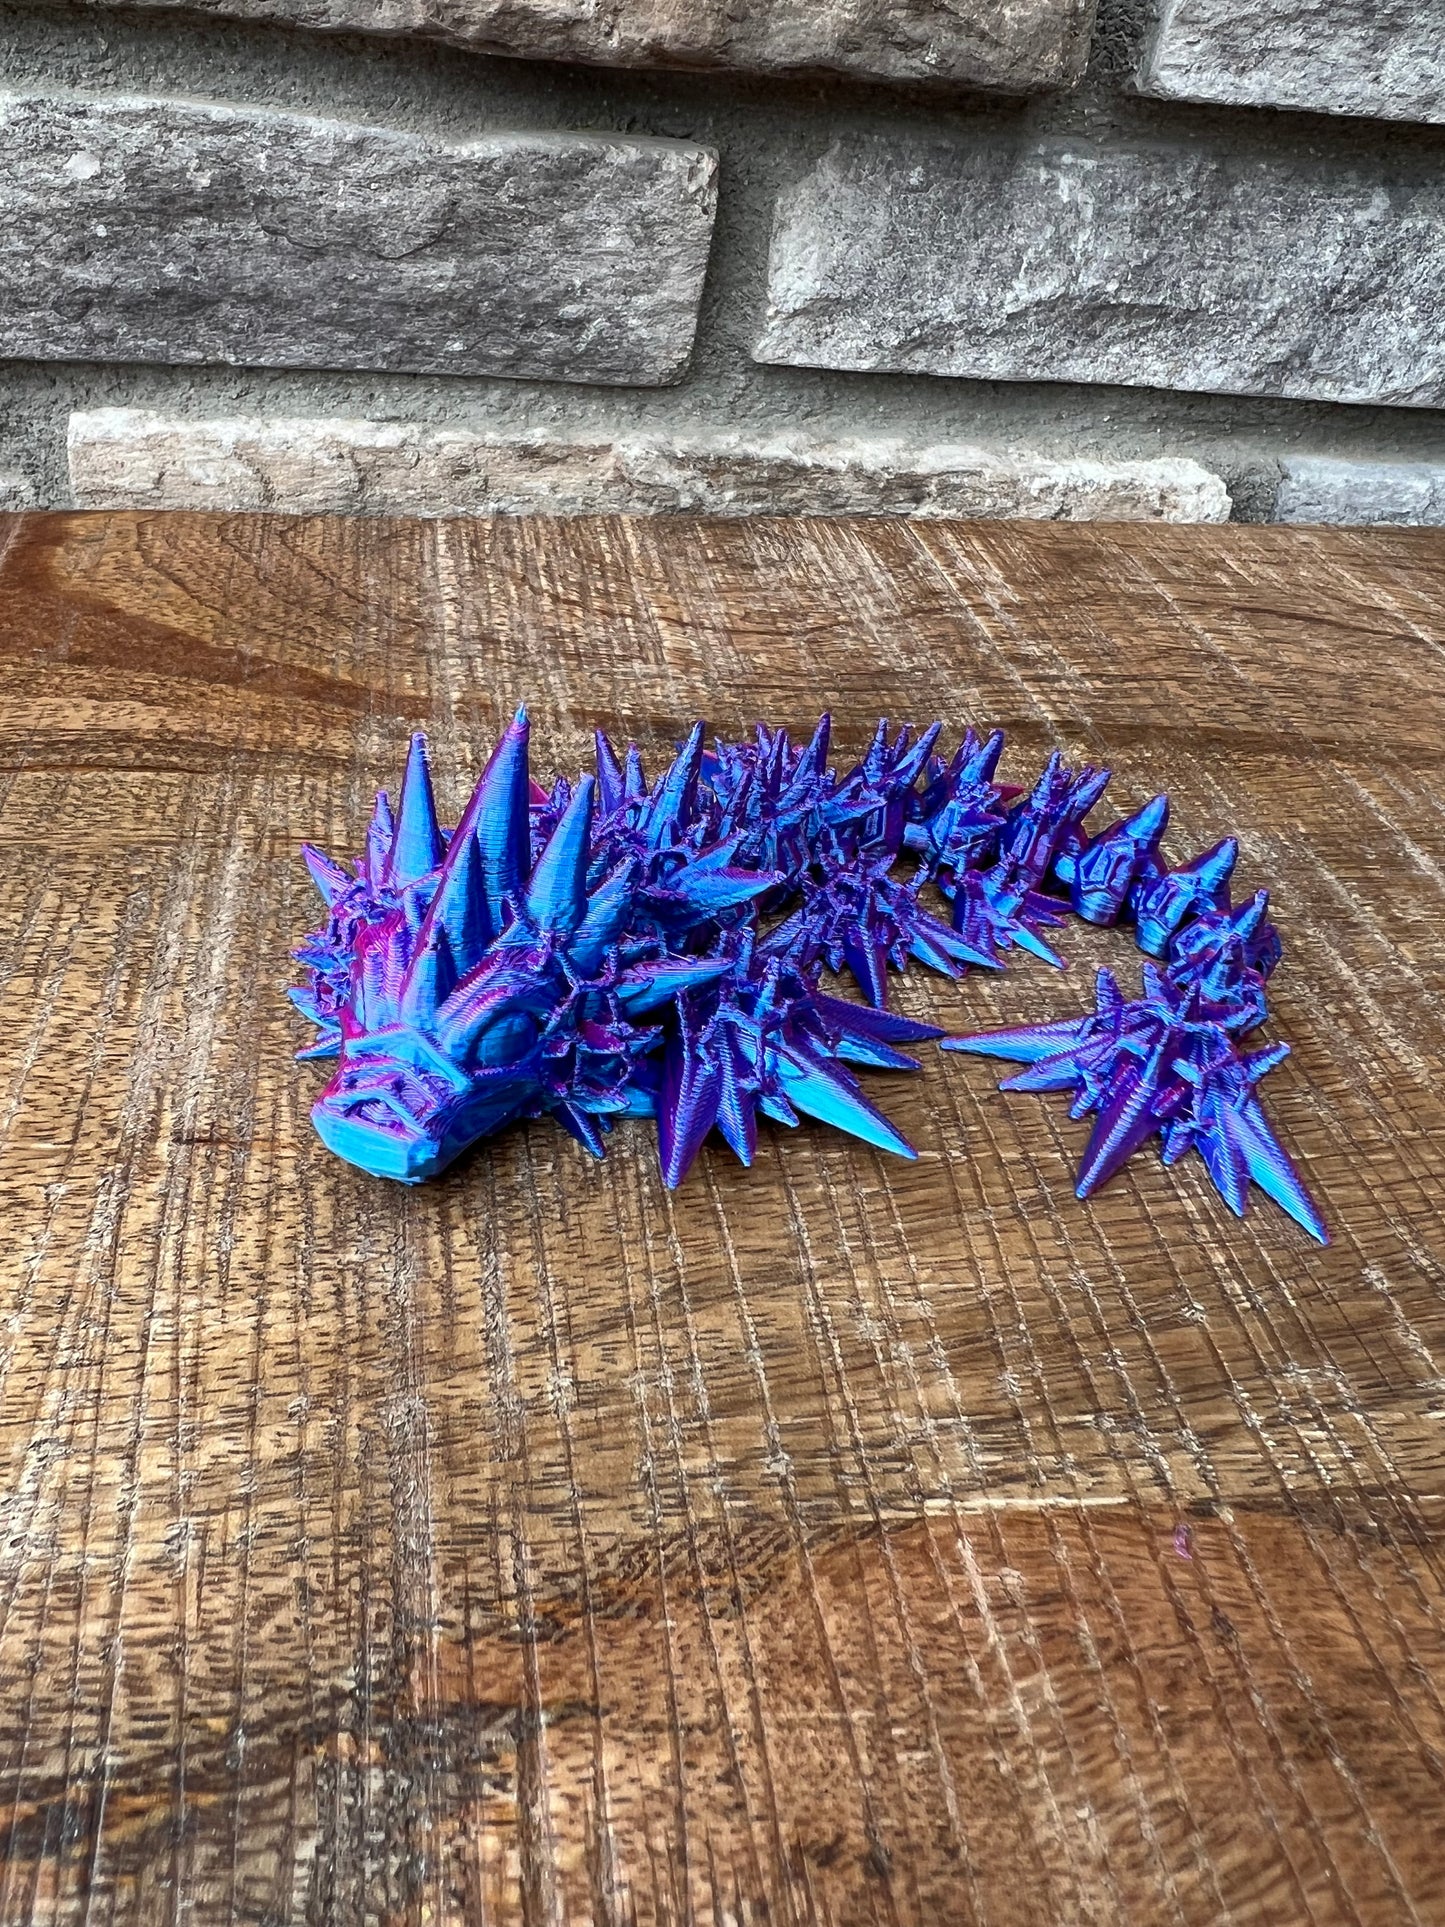 Baby MINI Void Sea Dragon | 3d Printed | Articulated Flexible | Custom Fidget Toy